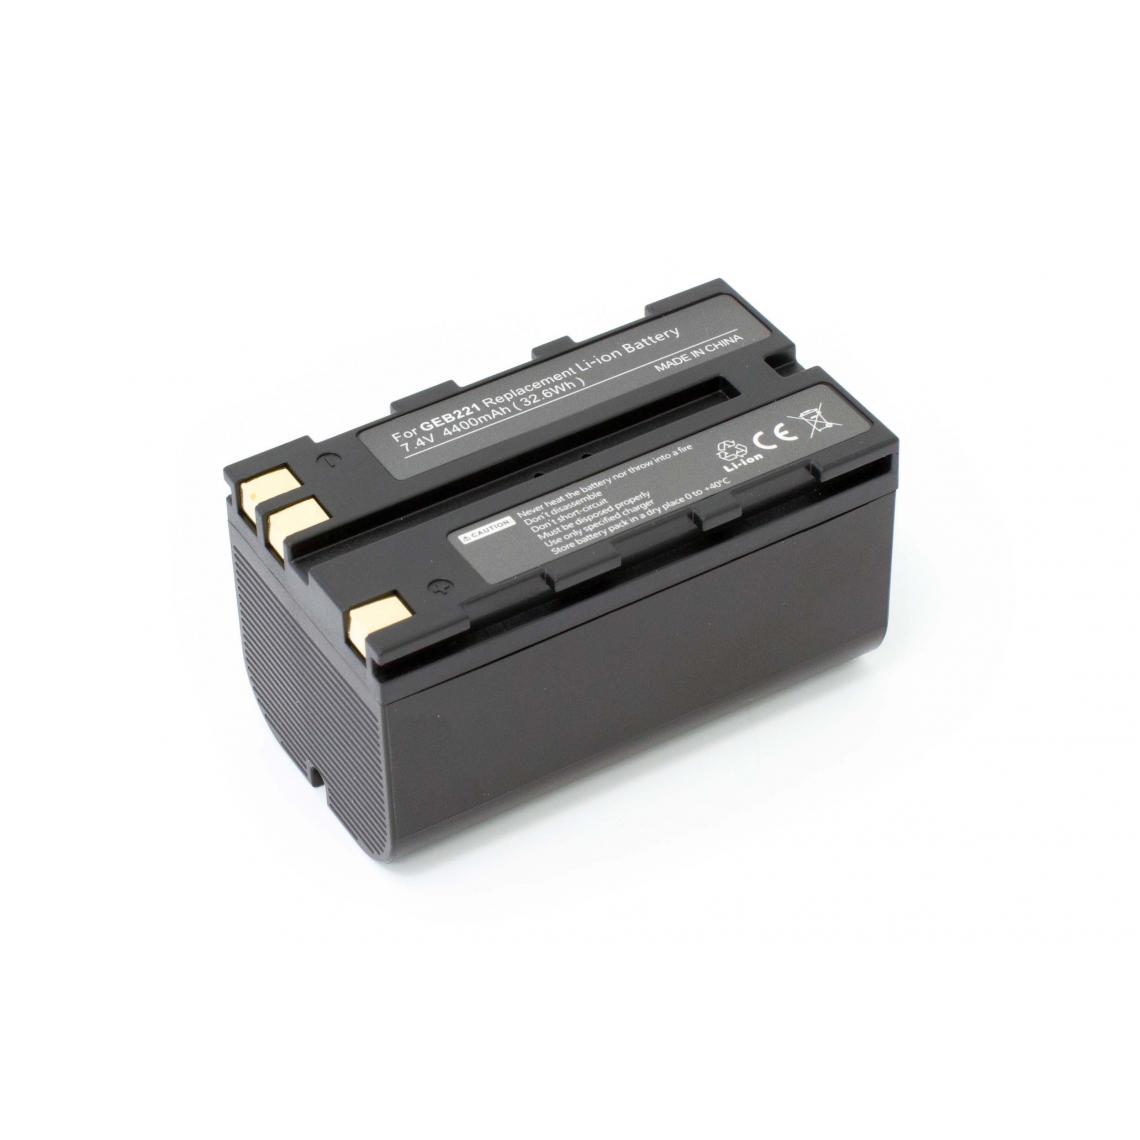 Vhbw - vhbw Batterie compatible avec Leica Piper 100, 100 Laser, 200 dispositif de mesure laser, outil de mesure (4400mAh, 7,4V, Li-ion) - Piles rechargeables